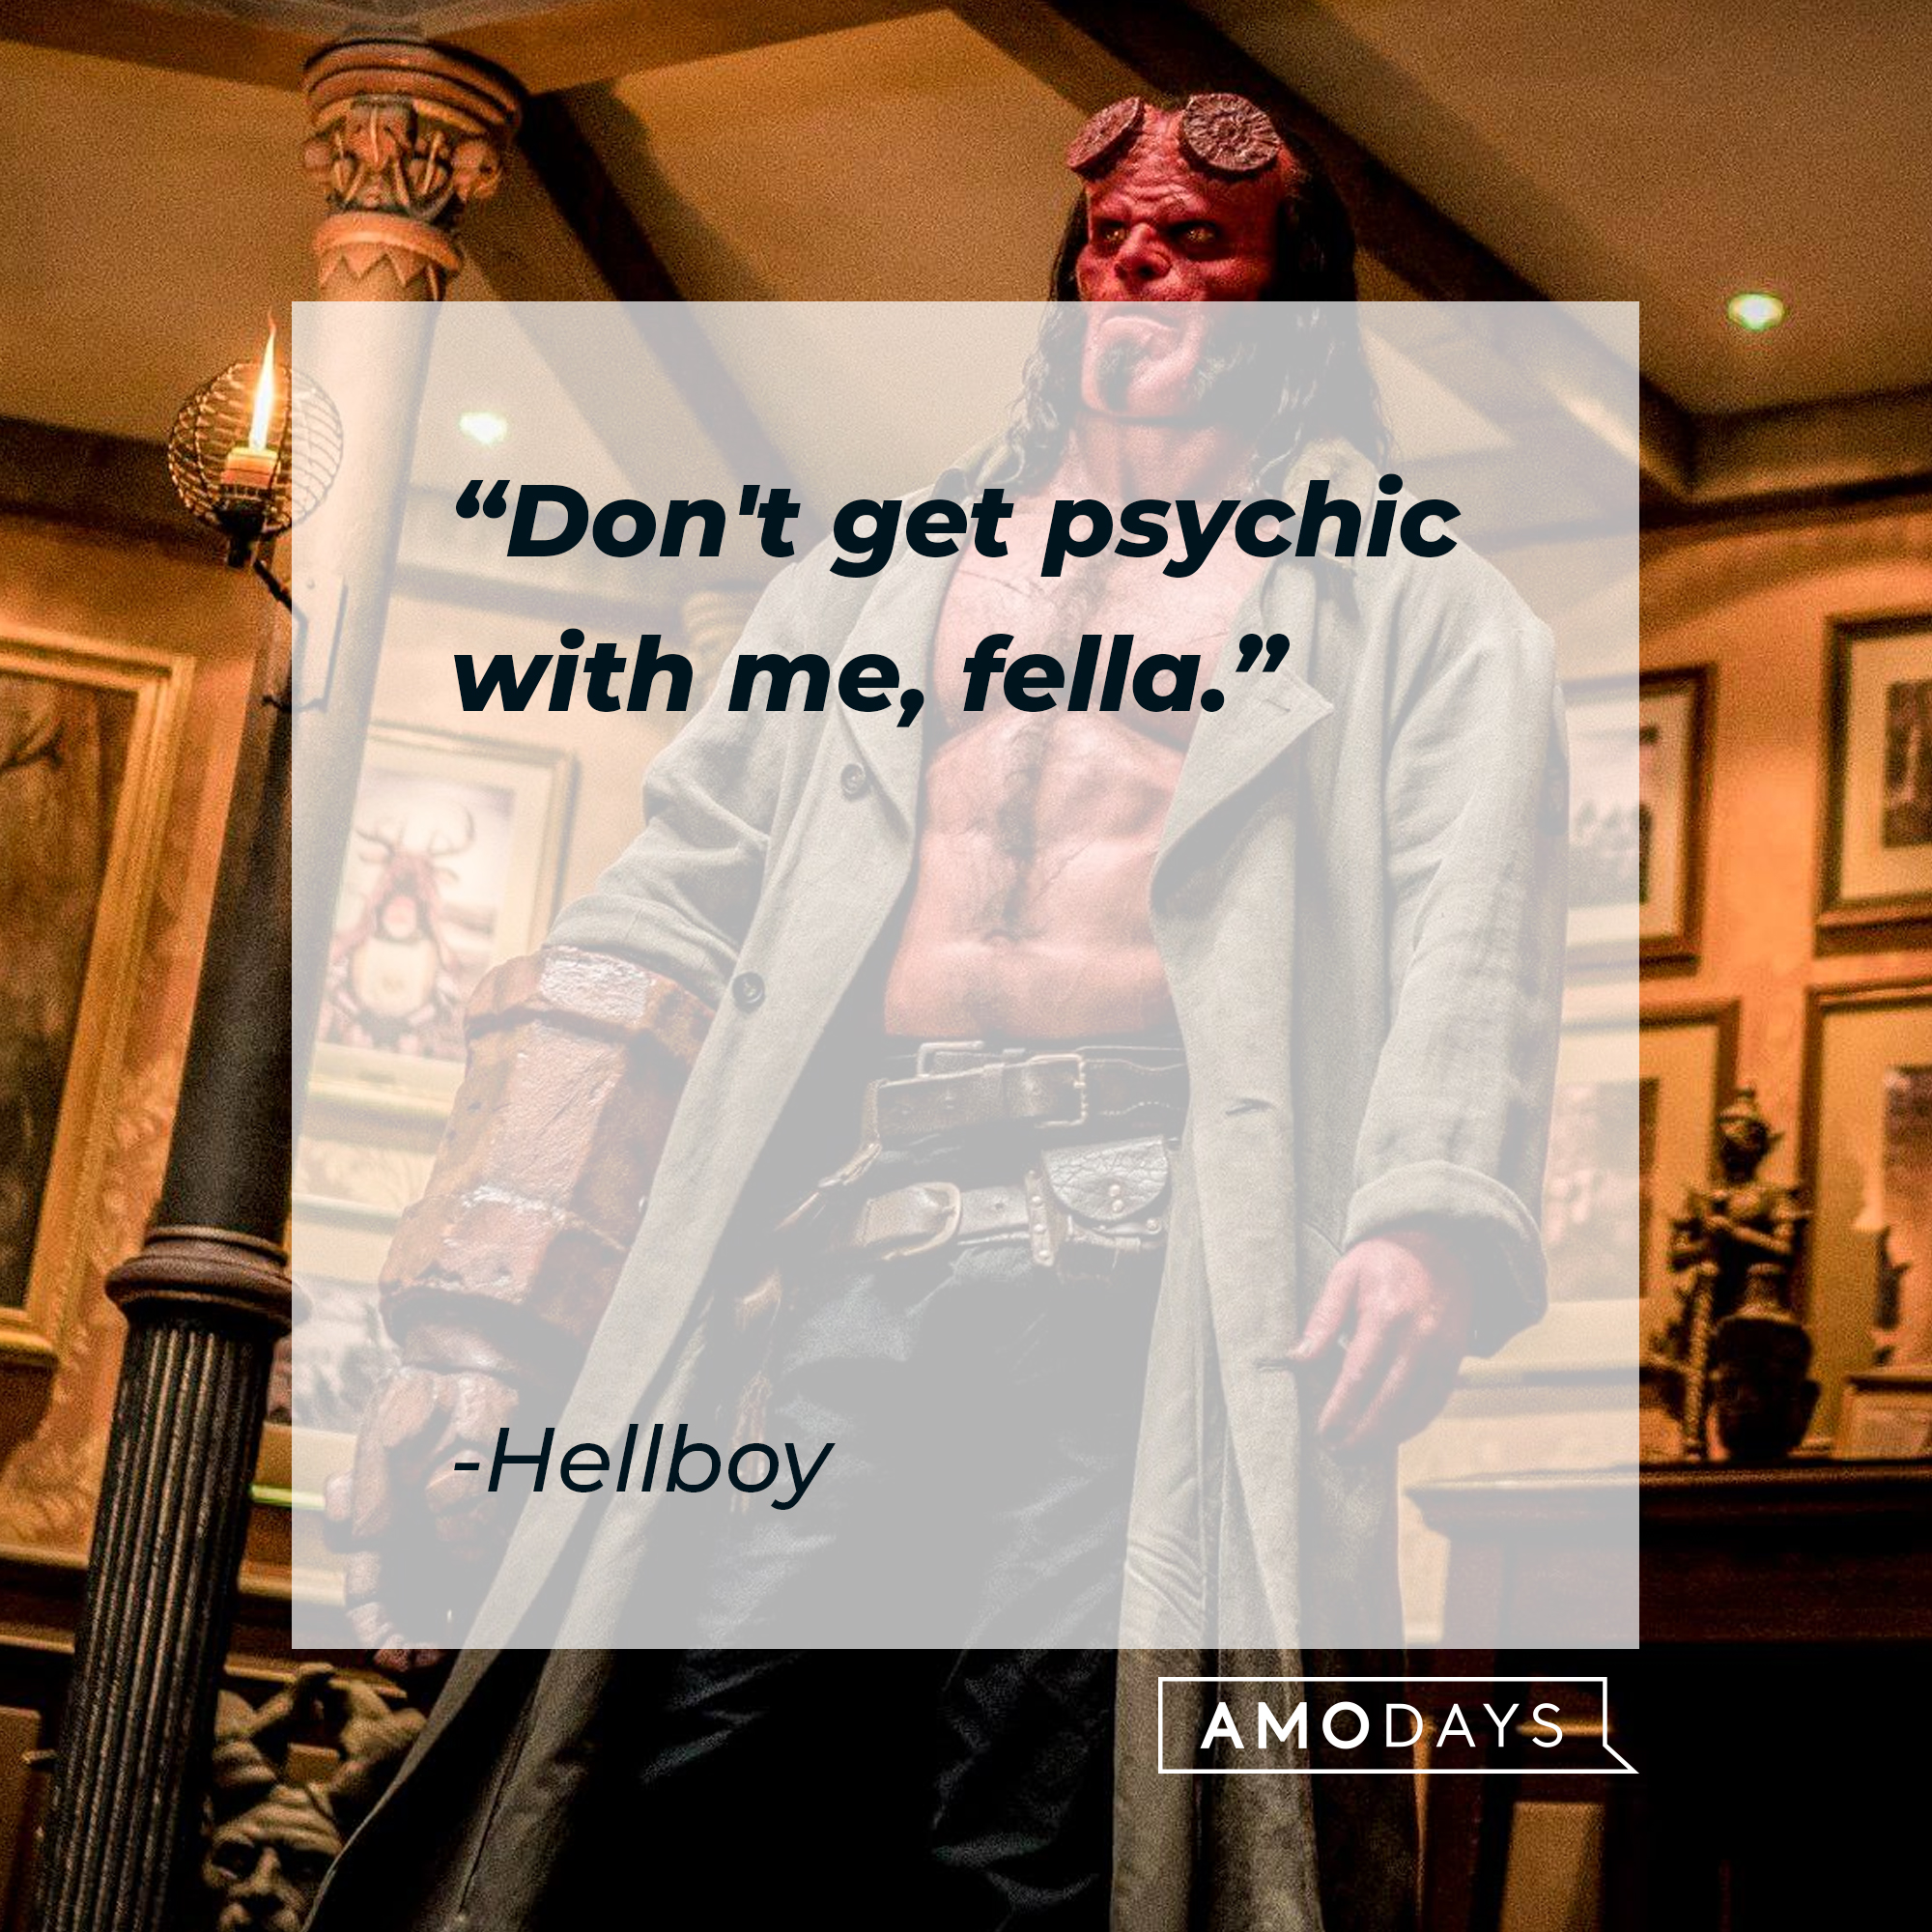 Hellboy's quote: "Don't get psychic with me, fella." | Source: facebook.com/hellboymovie